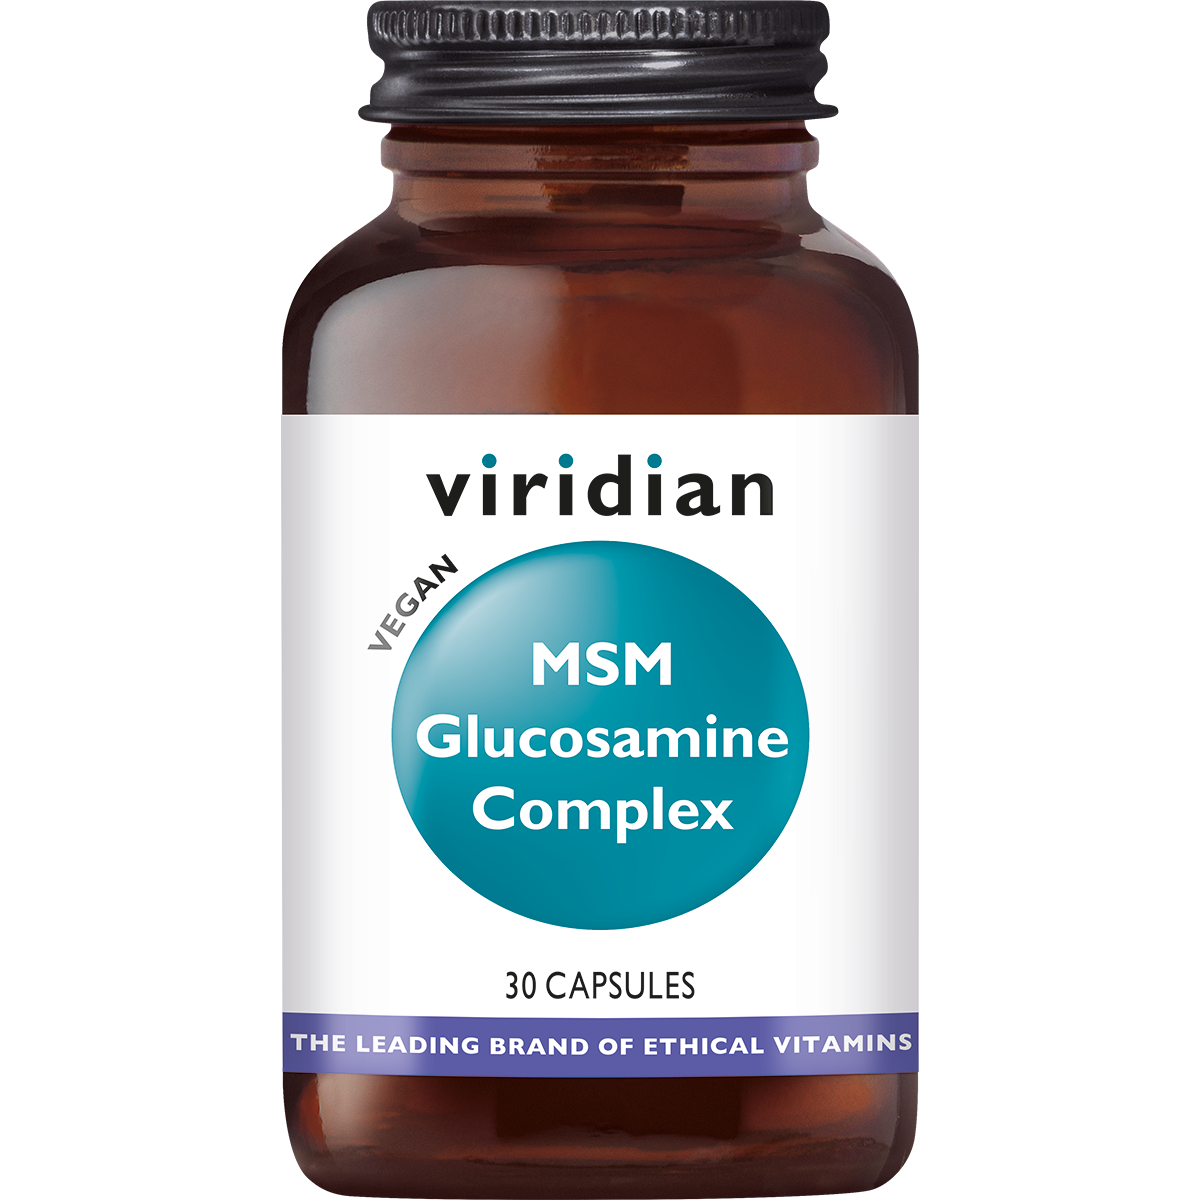 MSM Glucosamine Complex